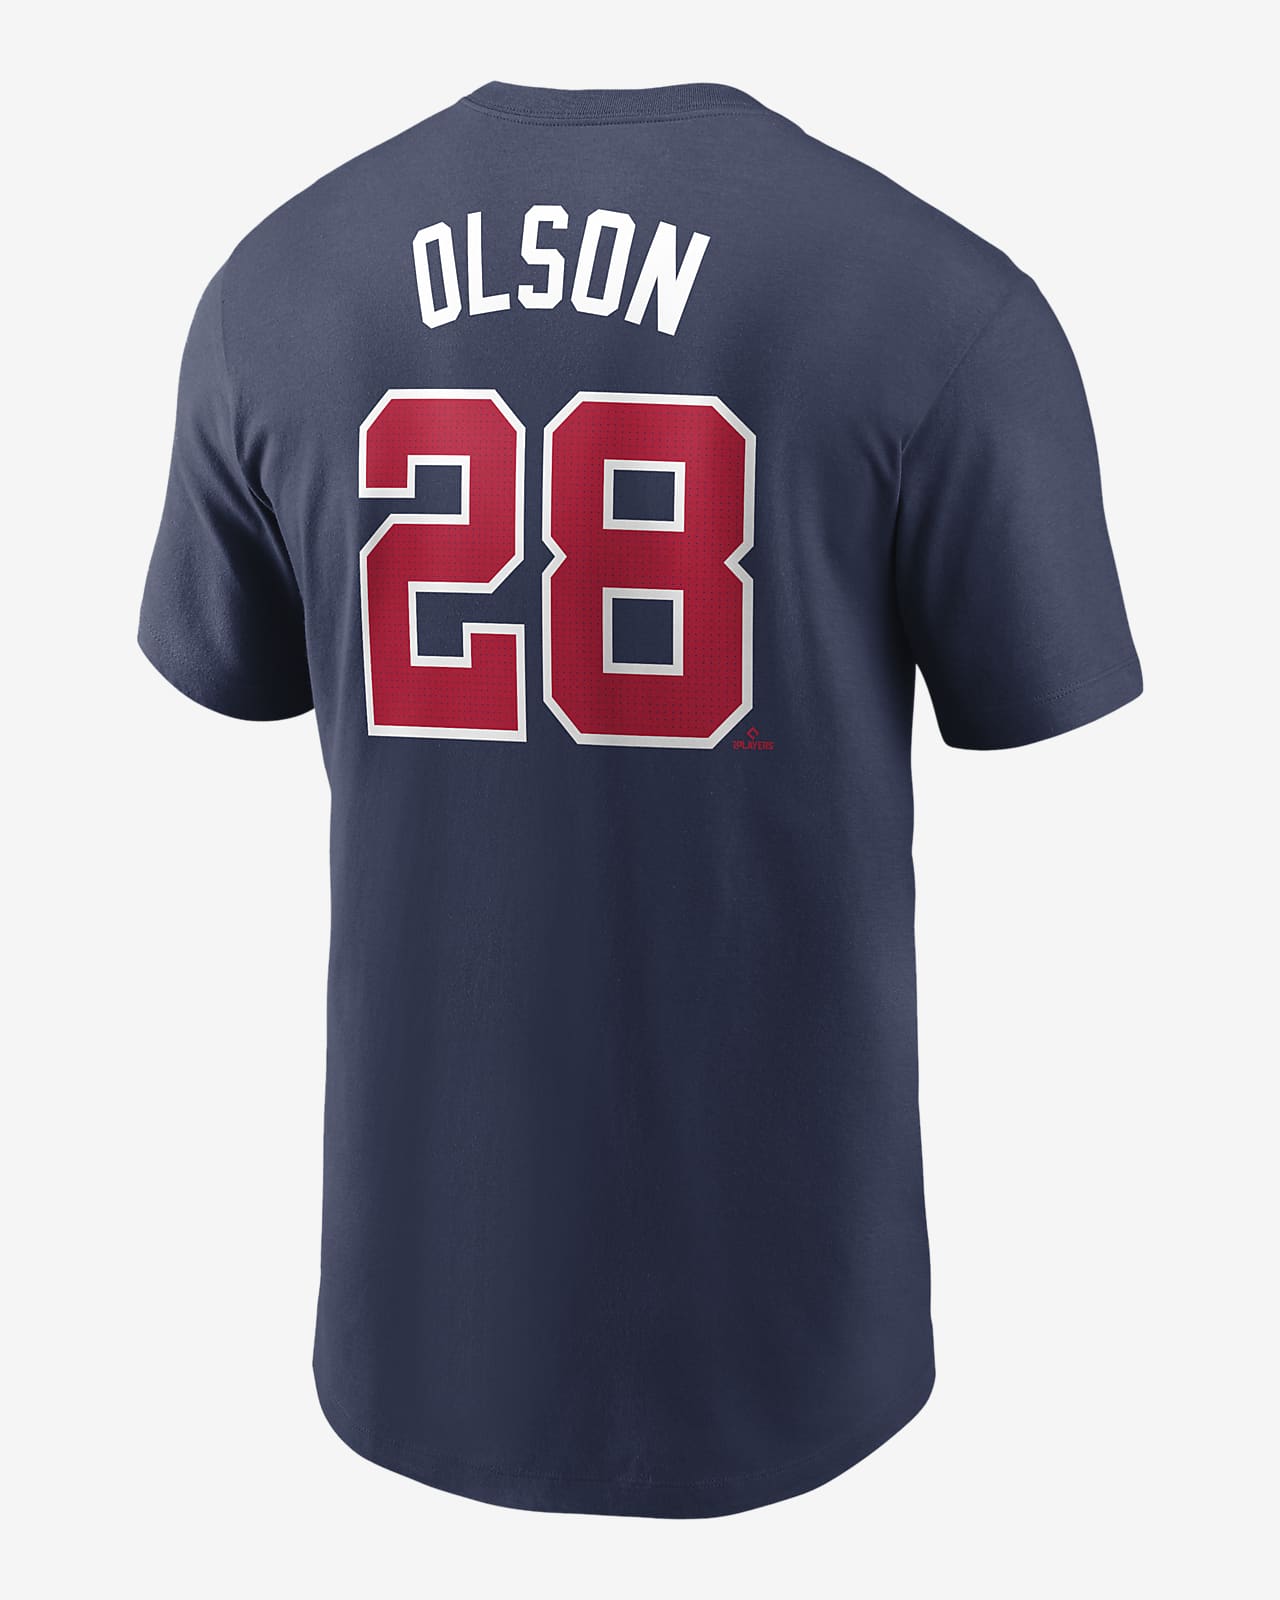 Matt Olson Atlanta Braves Fuse Men's Nike MLB T-Shirt